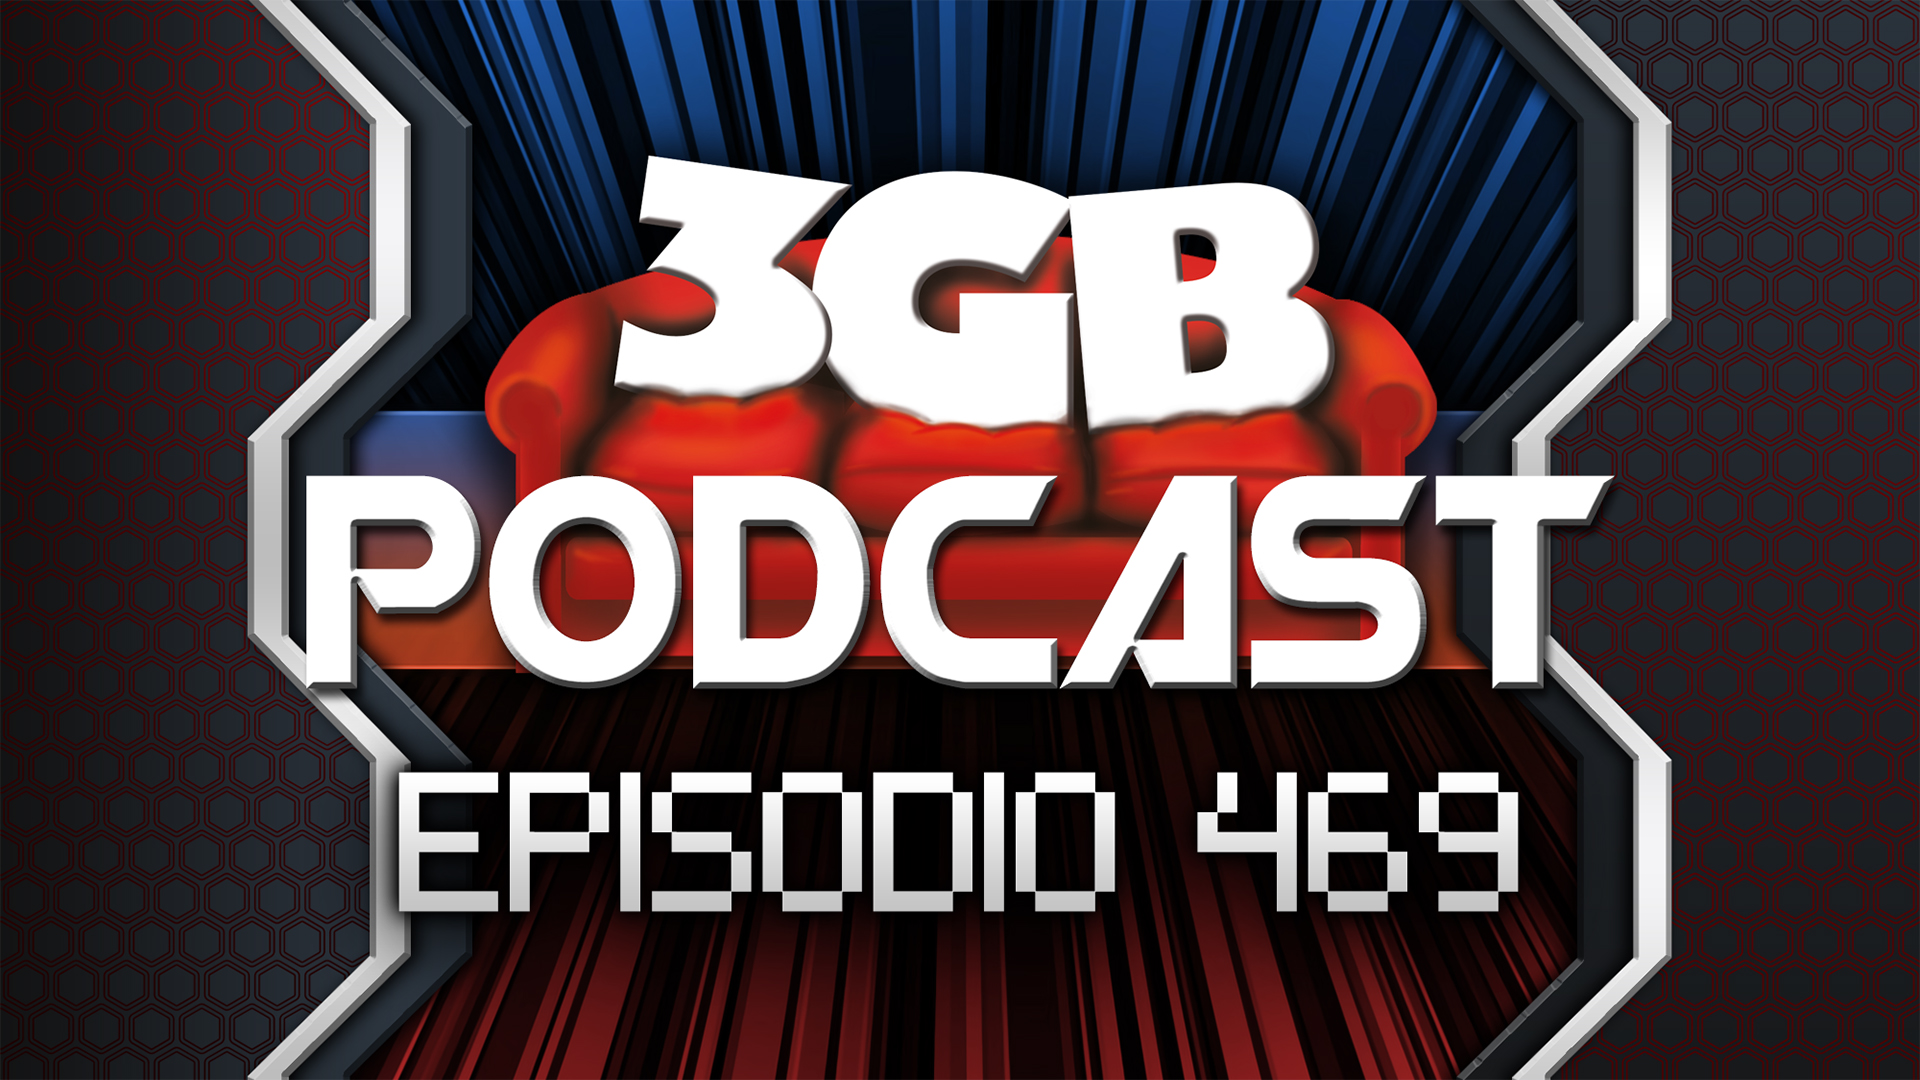 Podcast: Episodio 469, El Verdadero Fin del Wii U y 3DS